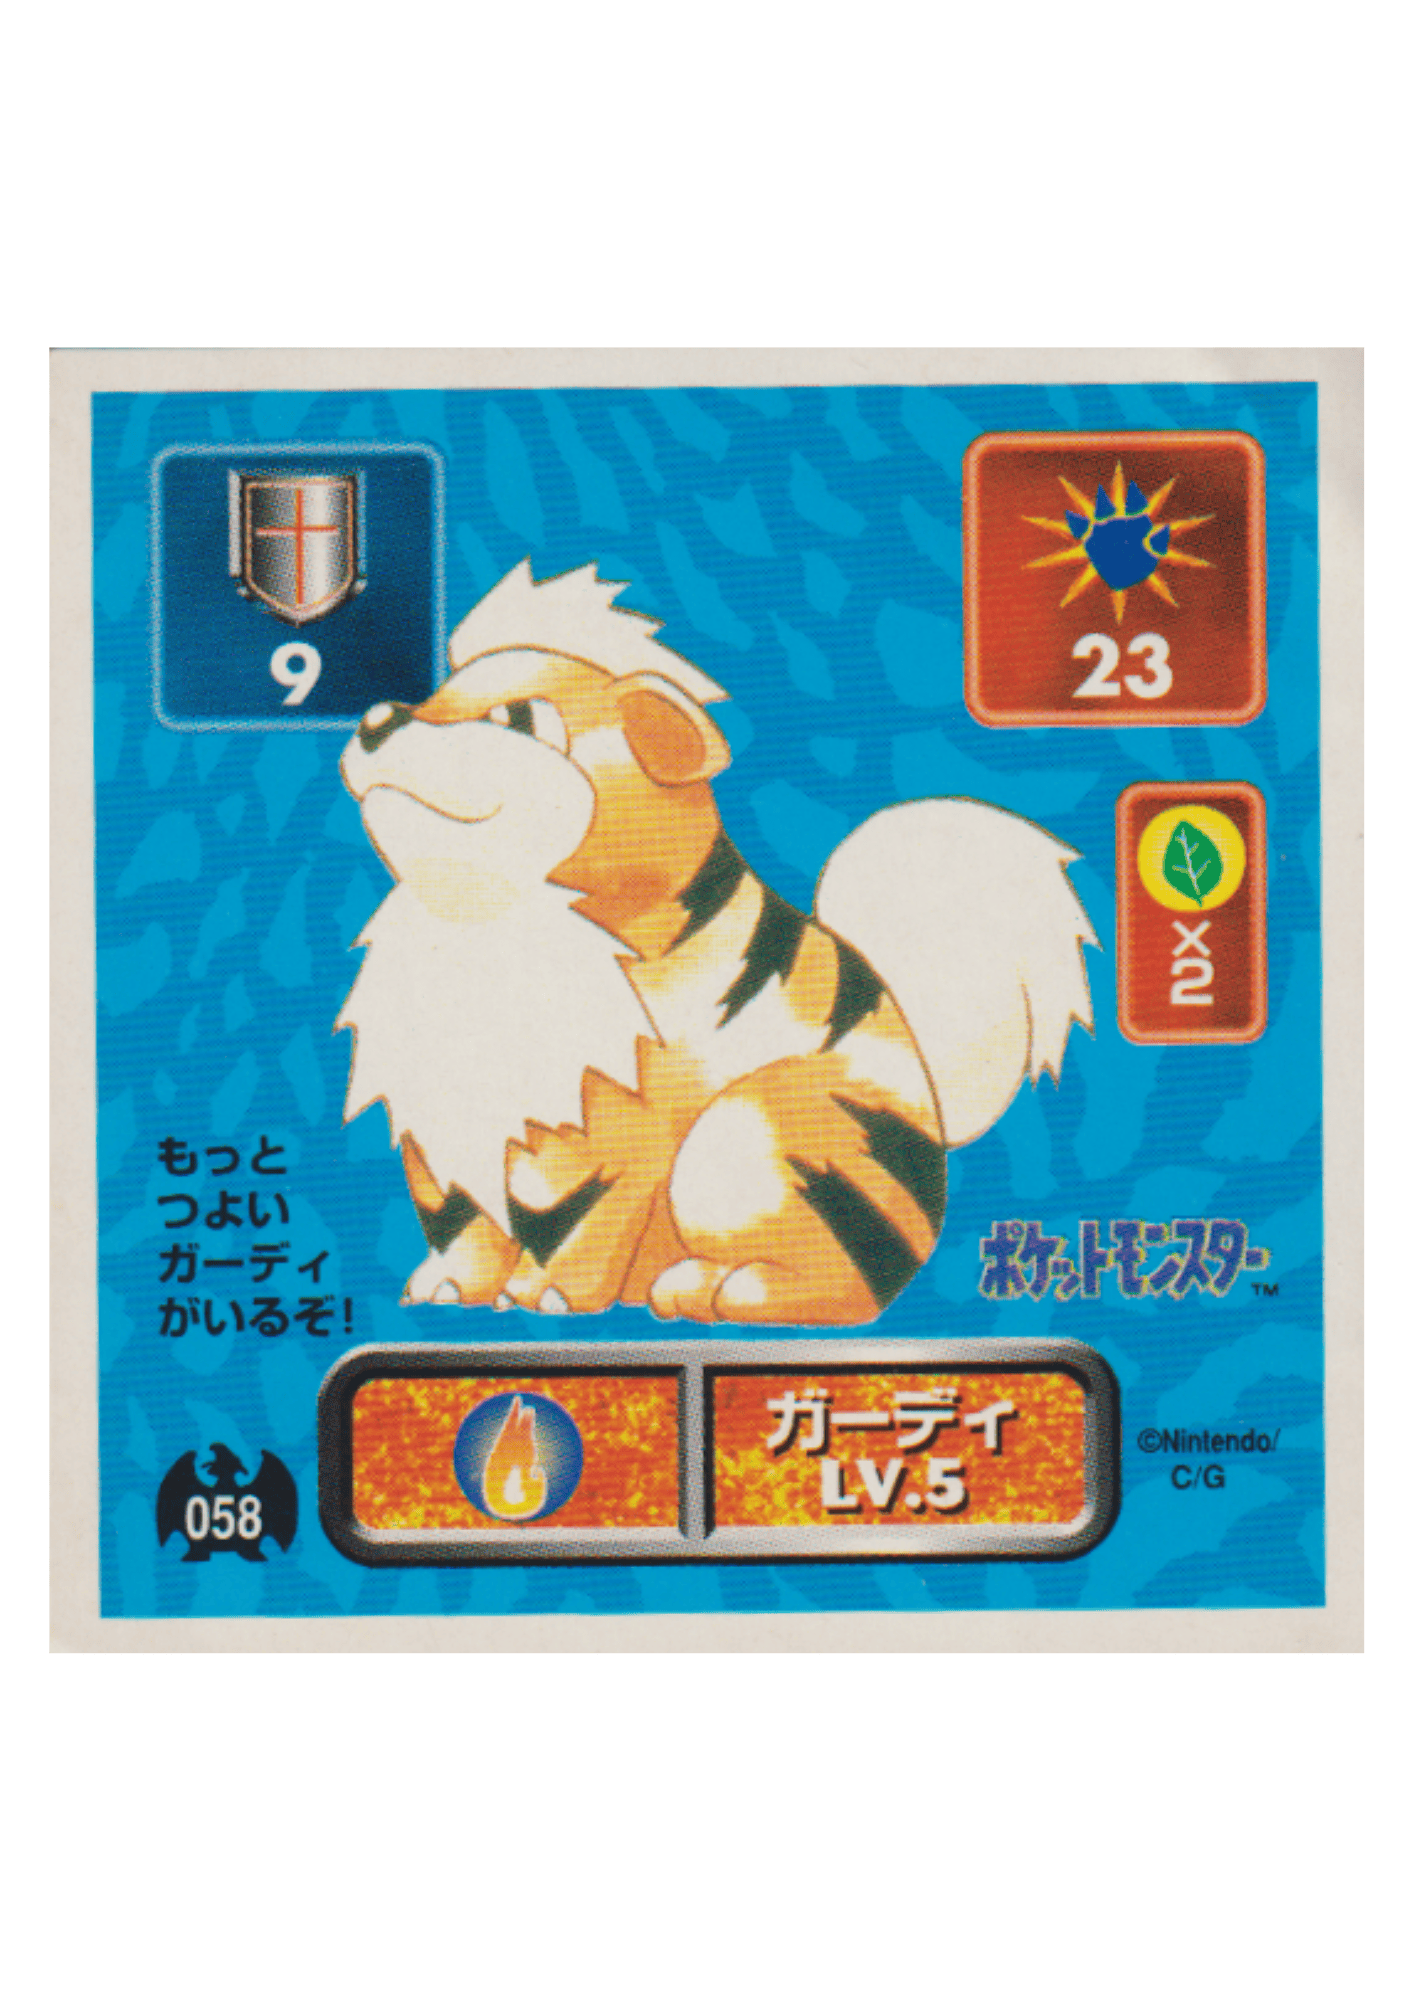 Adesivo Pokémon Amada (1996): 058 Growlithe